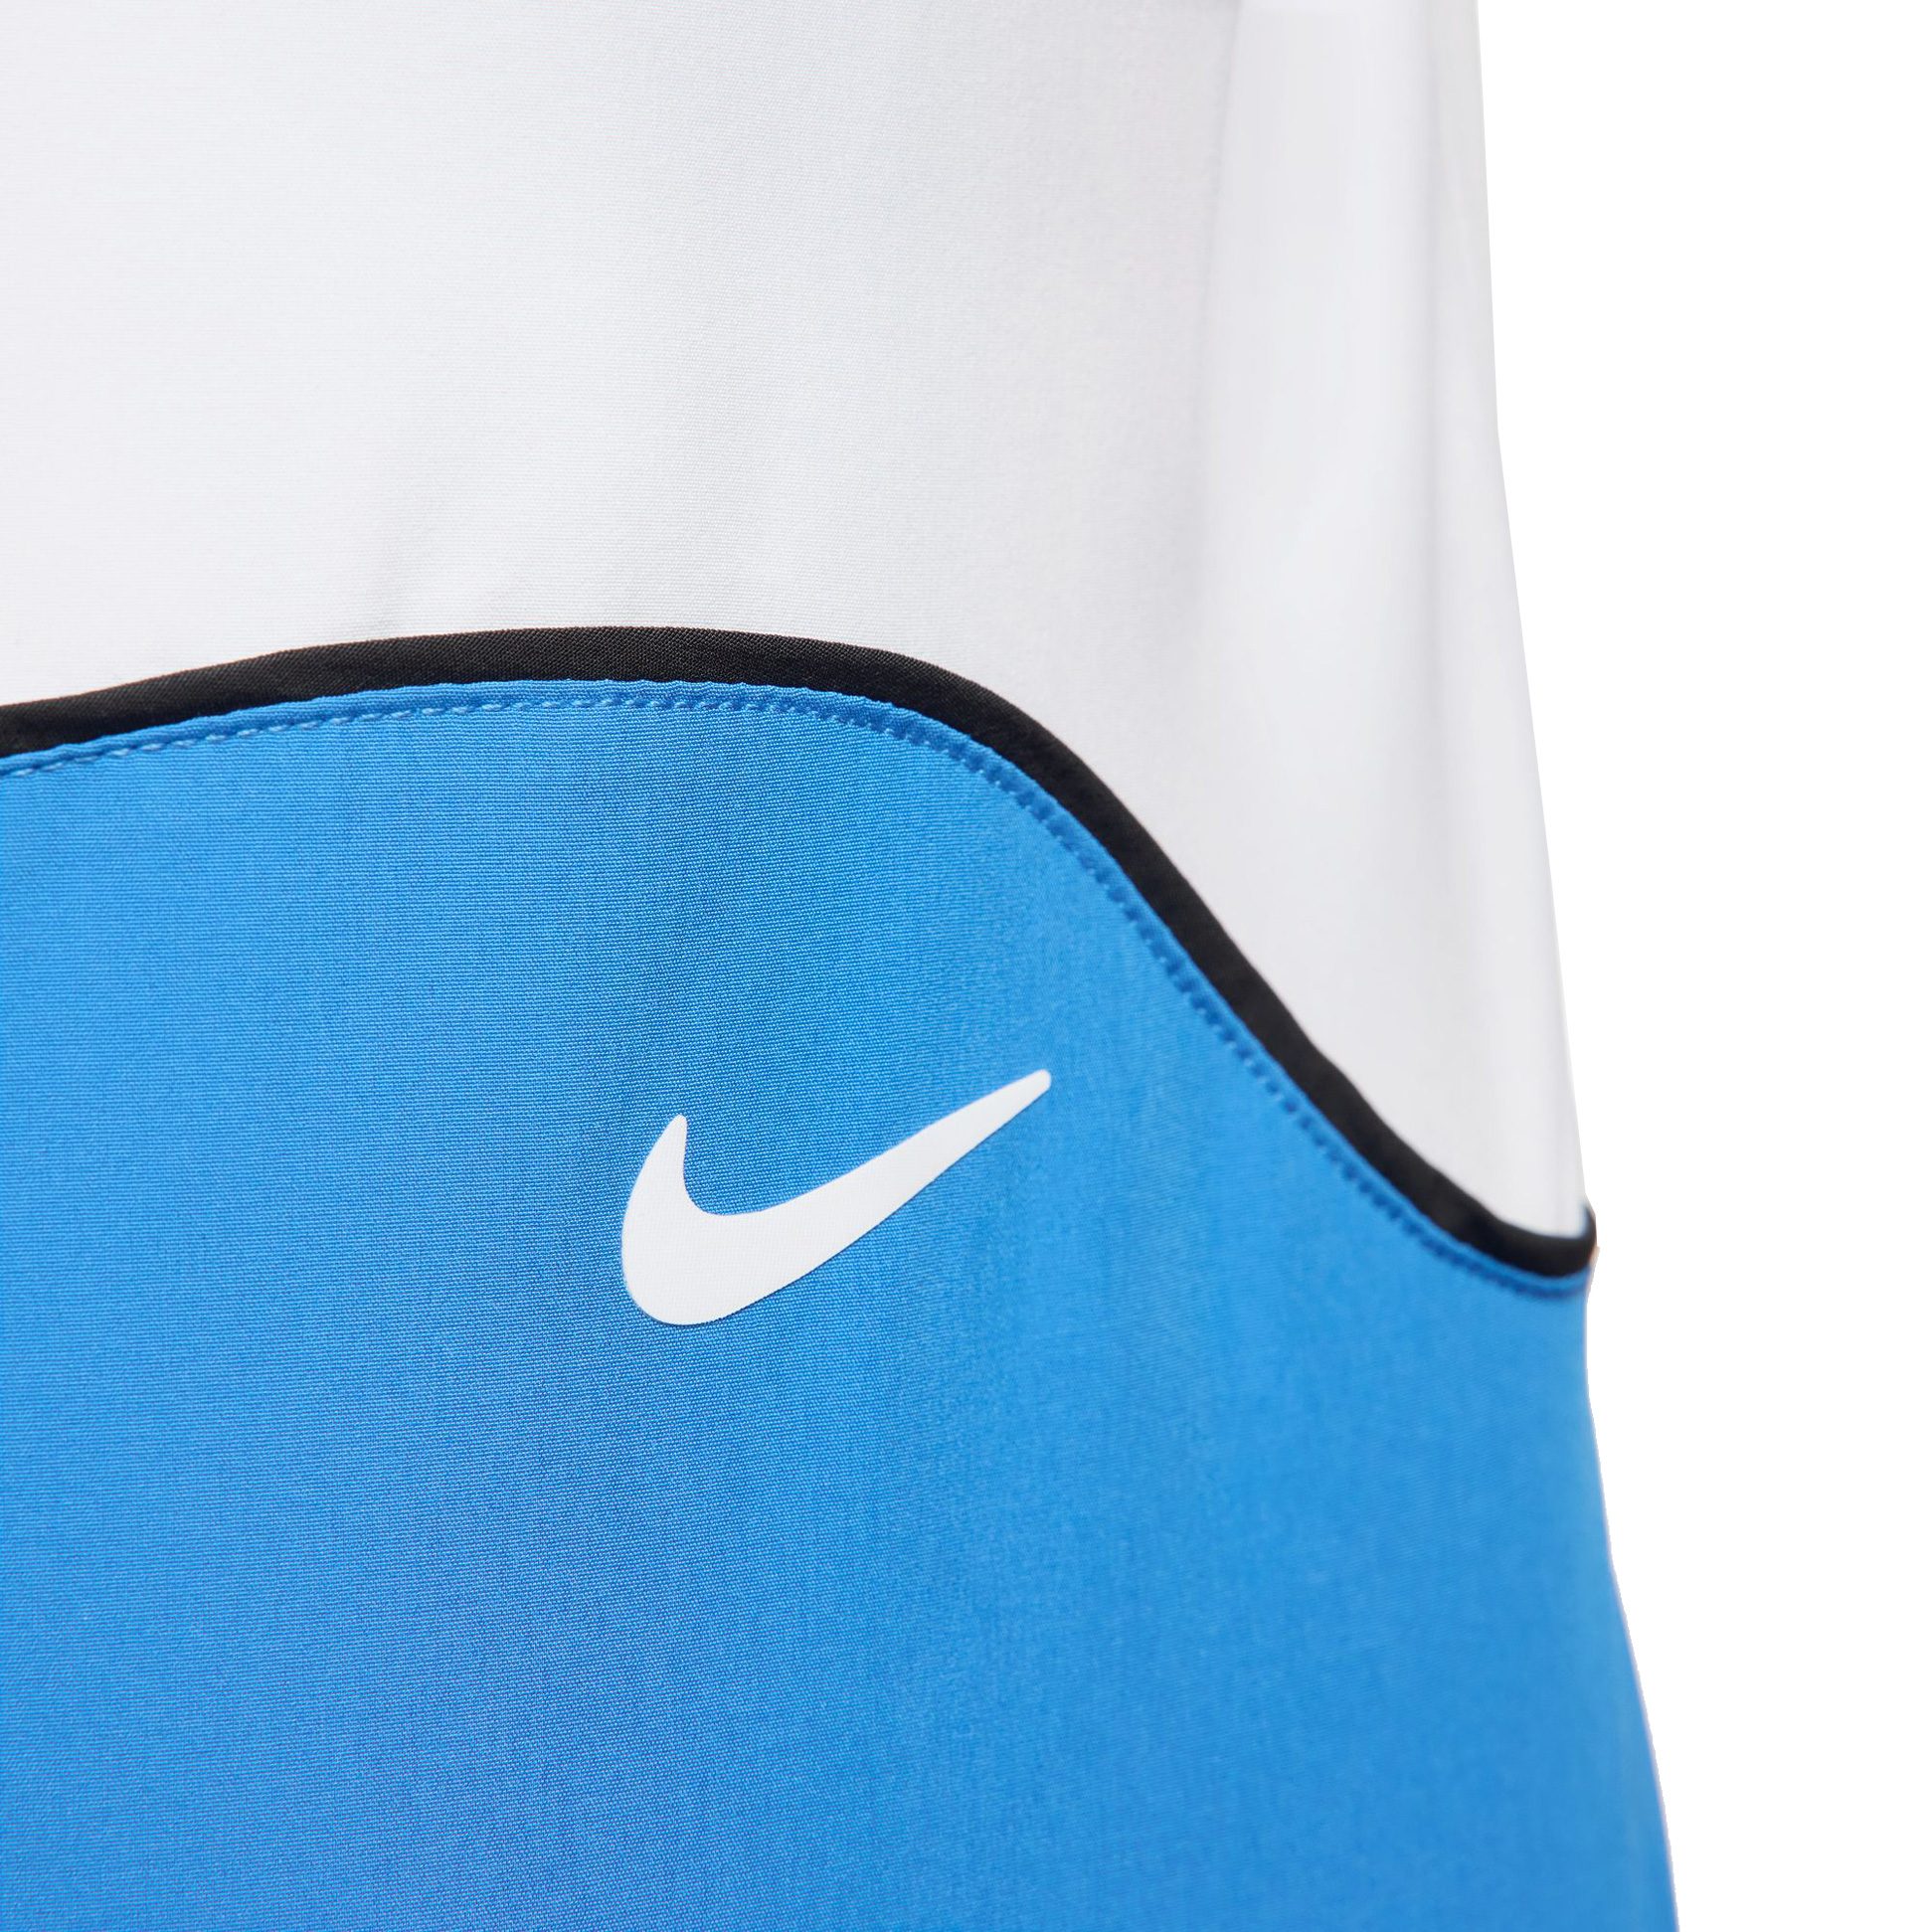 Nike Tennis pants COURT ATVANTAGE with mesh in white/ black